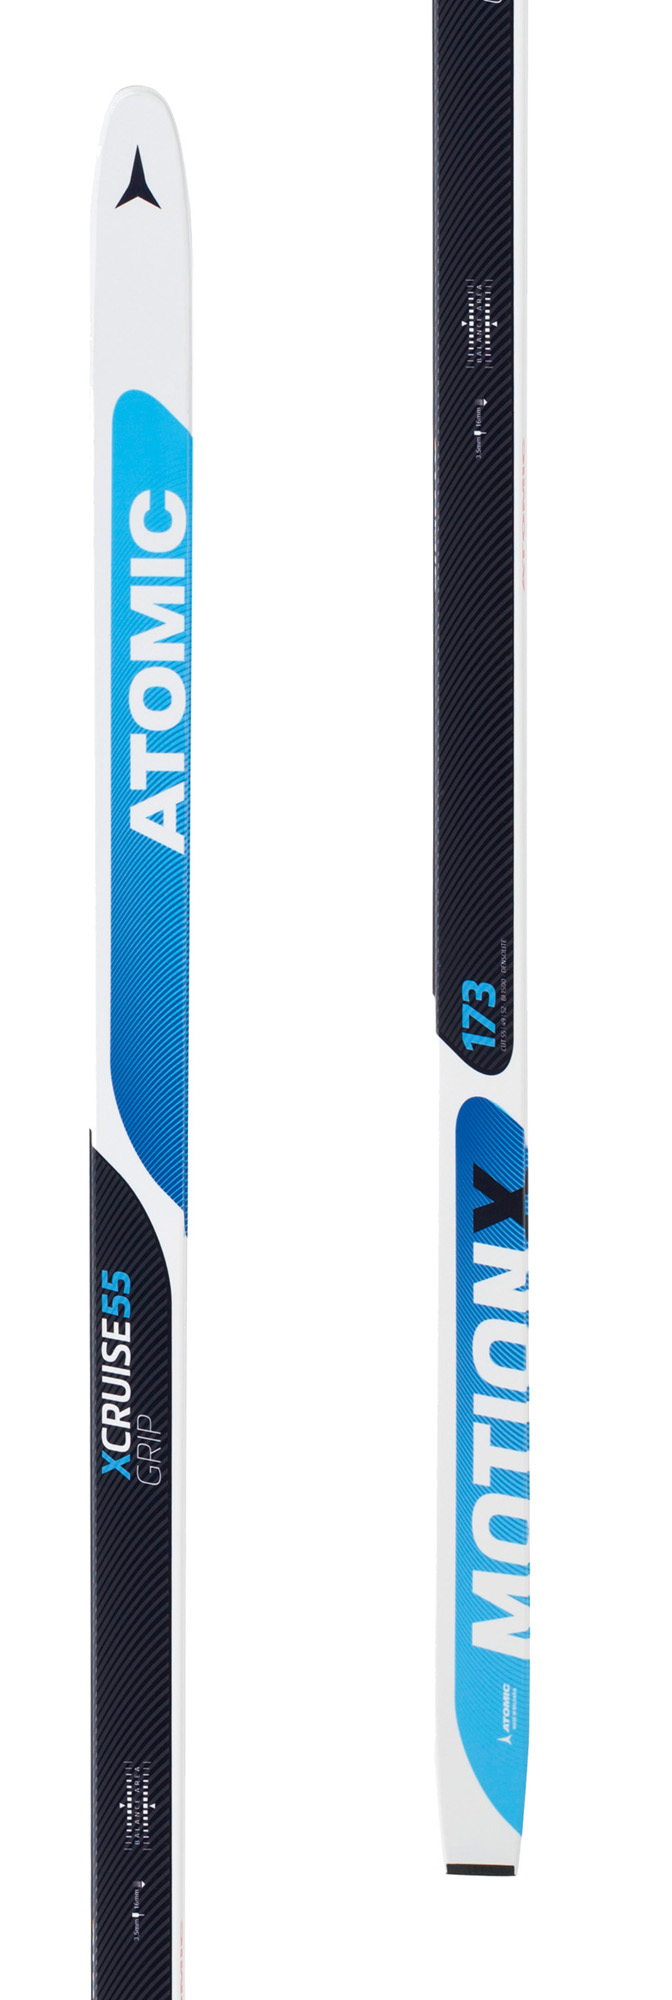 Motion XCruise 55 Grip nordic ski with  Auto Universal SNS bindings